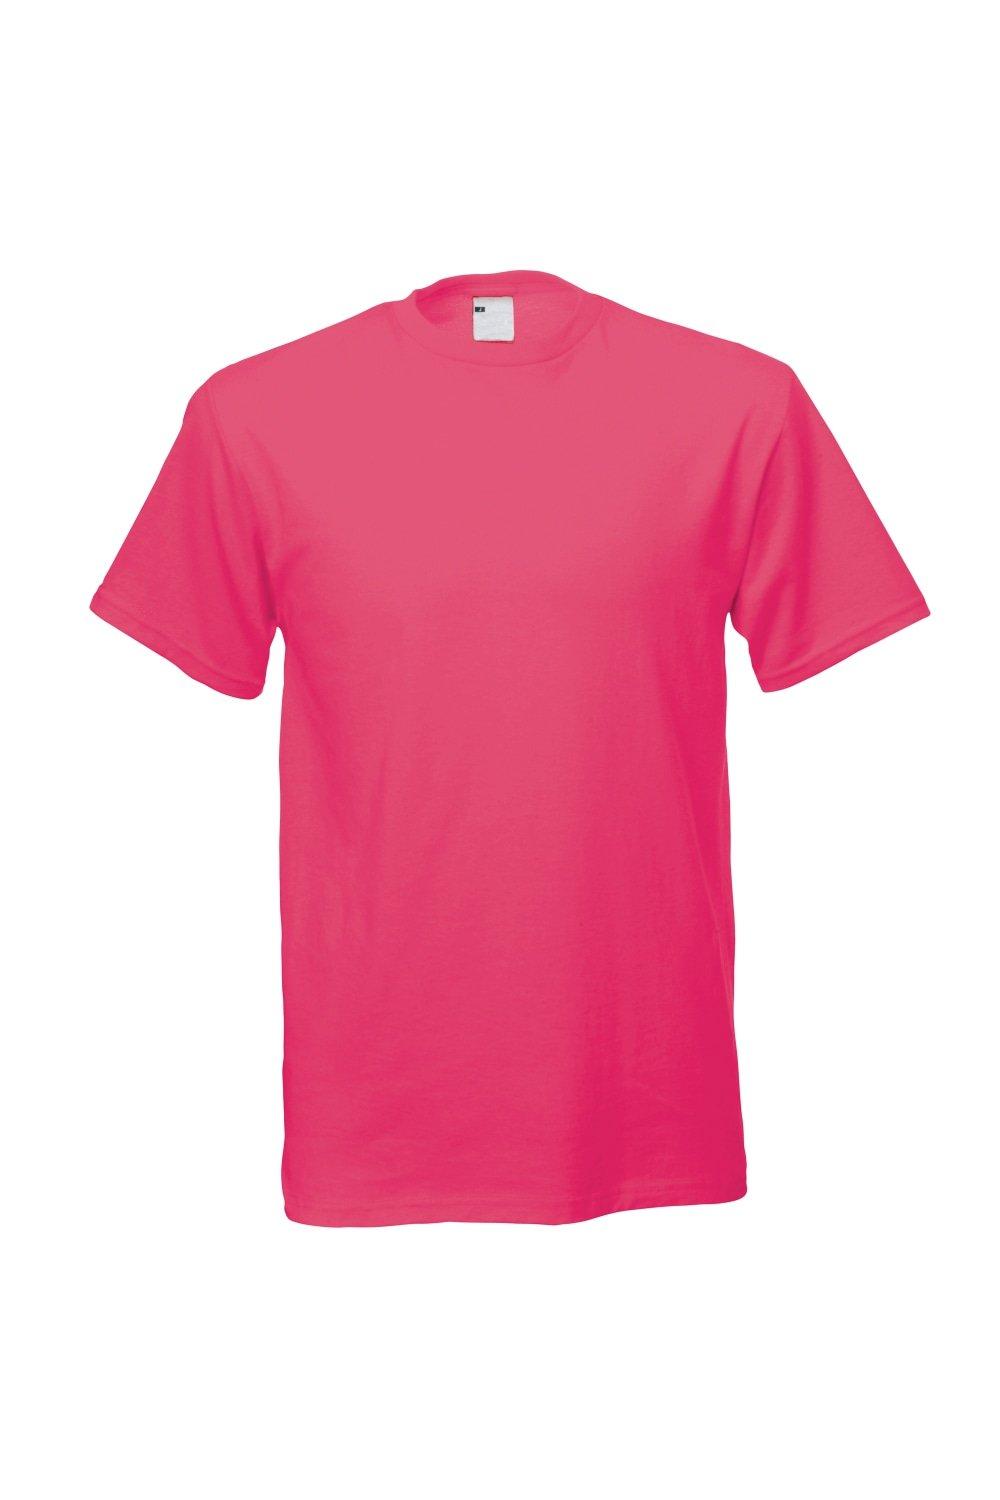 Повседневная футболка с коротким рукавом Universal Textiles, розовый повседневная футболка с коротким рукавом universal textiles синий